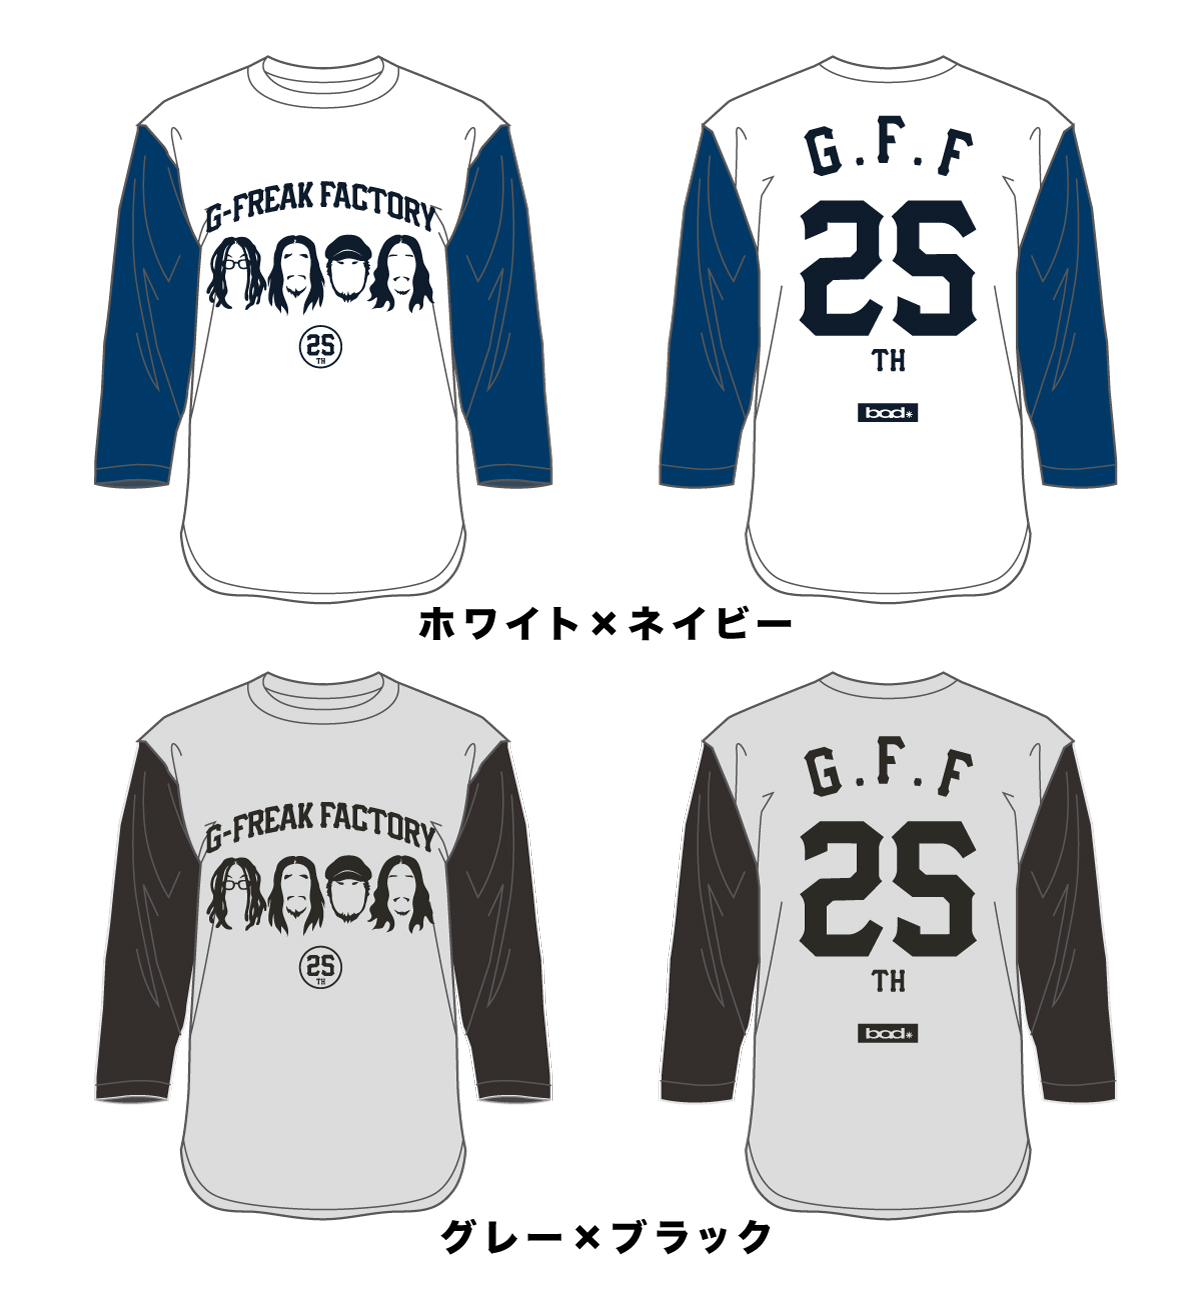 25th ベースボール Tシャツ | G-FREAK FACTORY OFFICIAL WEBSITE